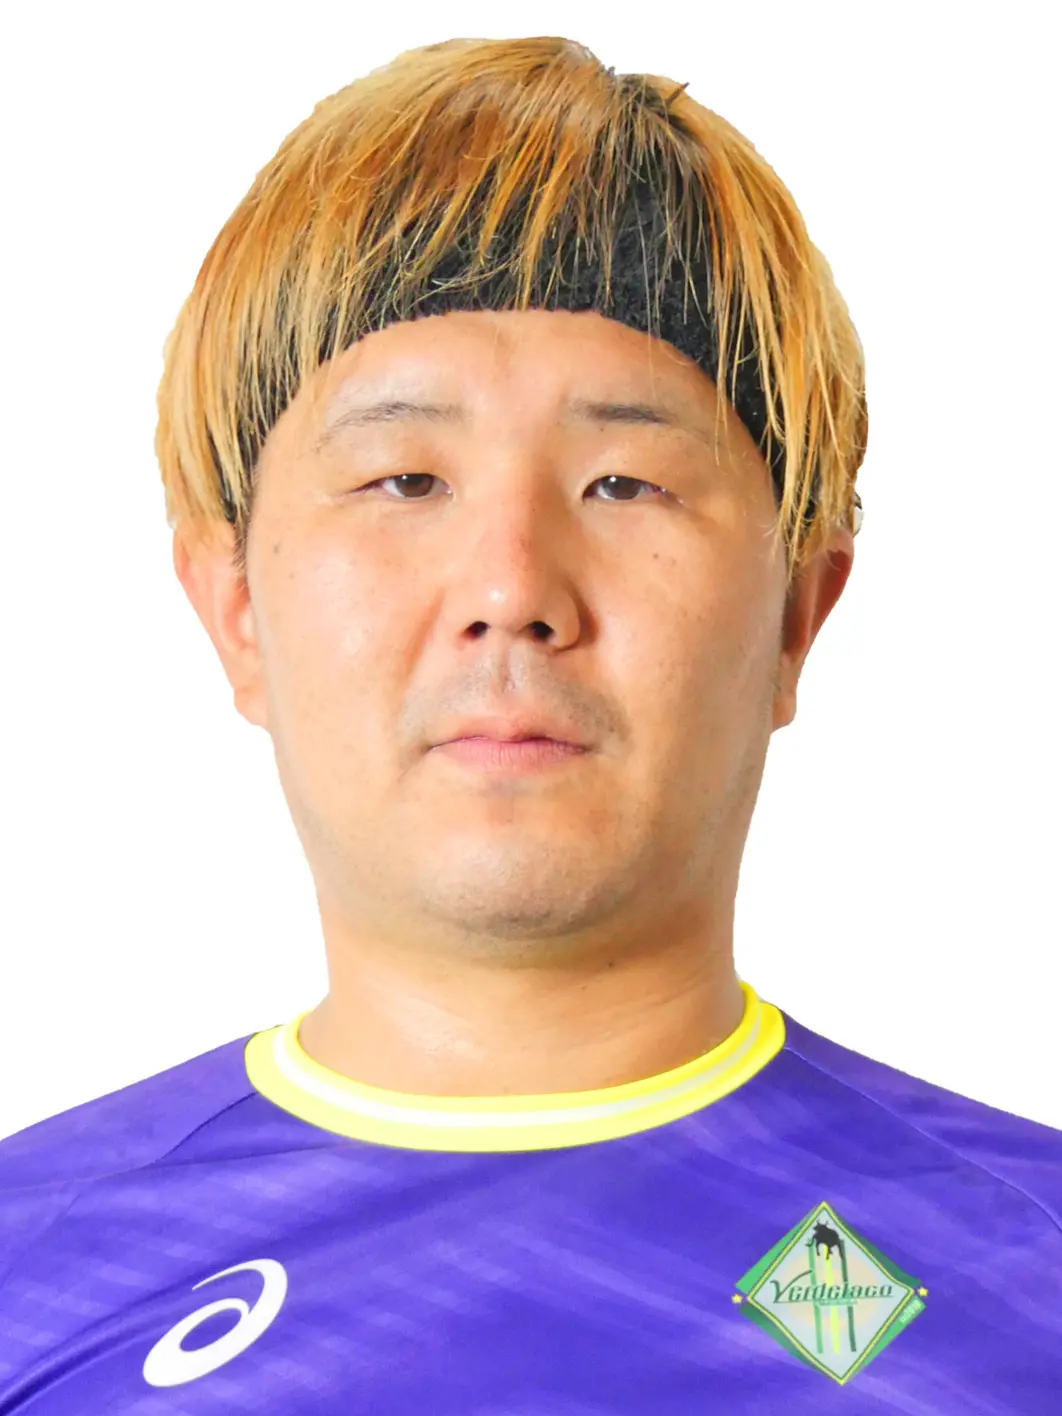 辻村裕太選手の顔写真